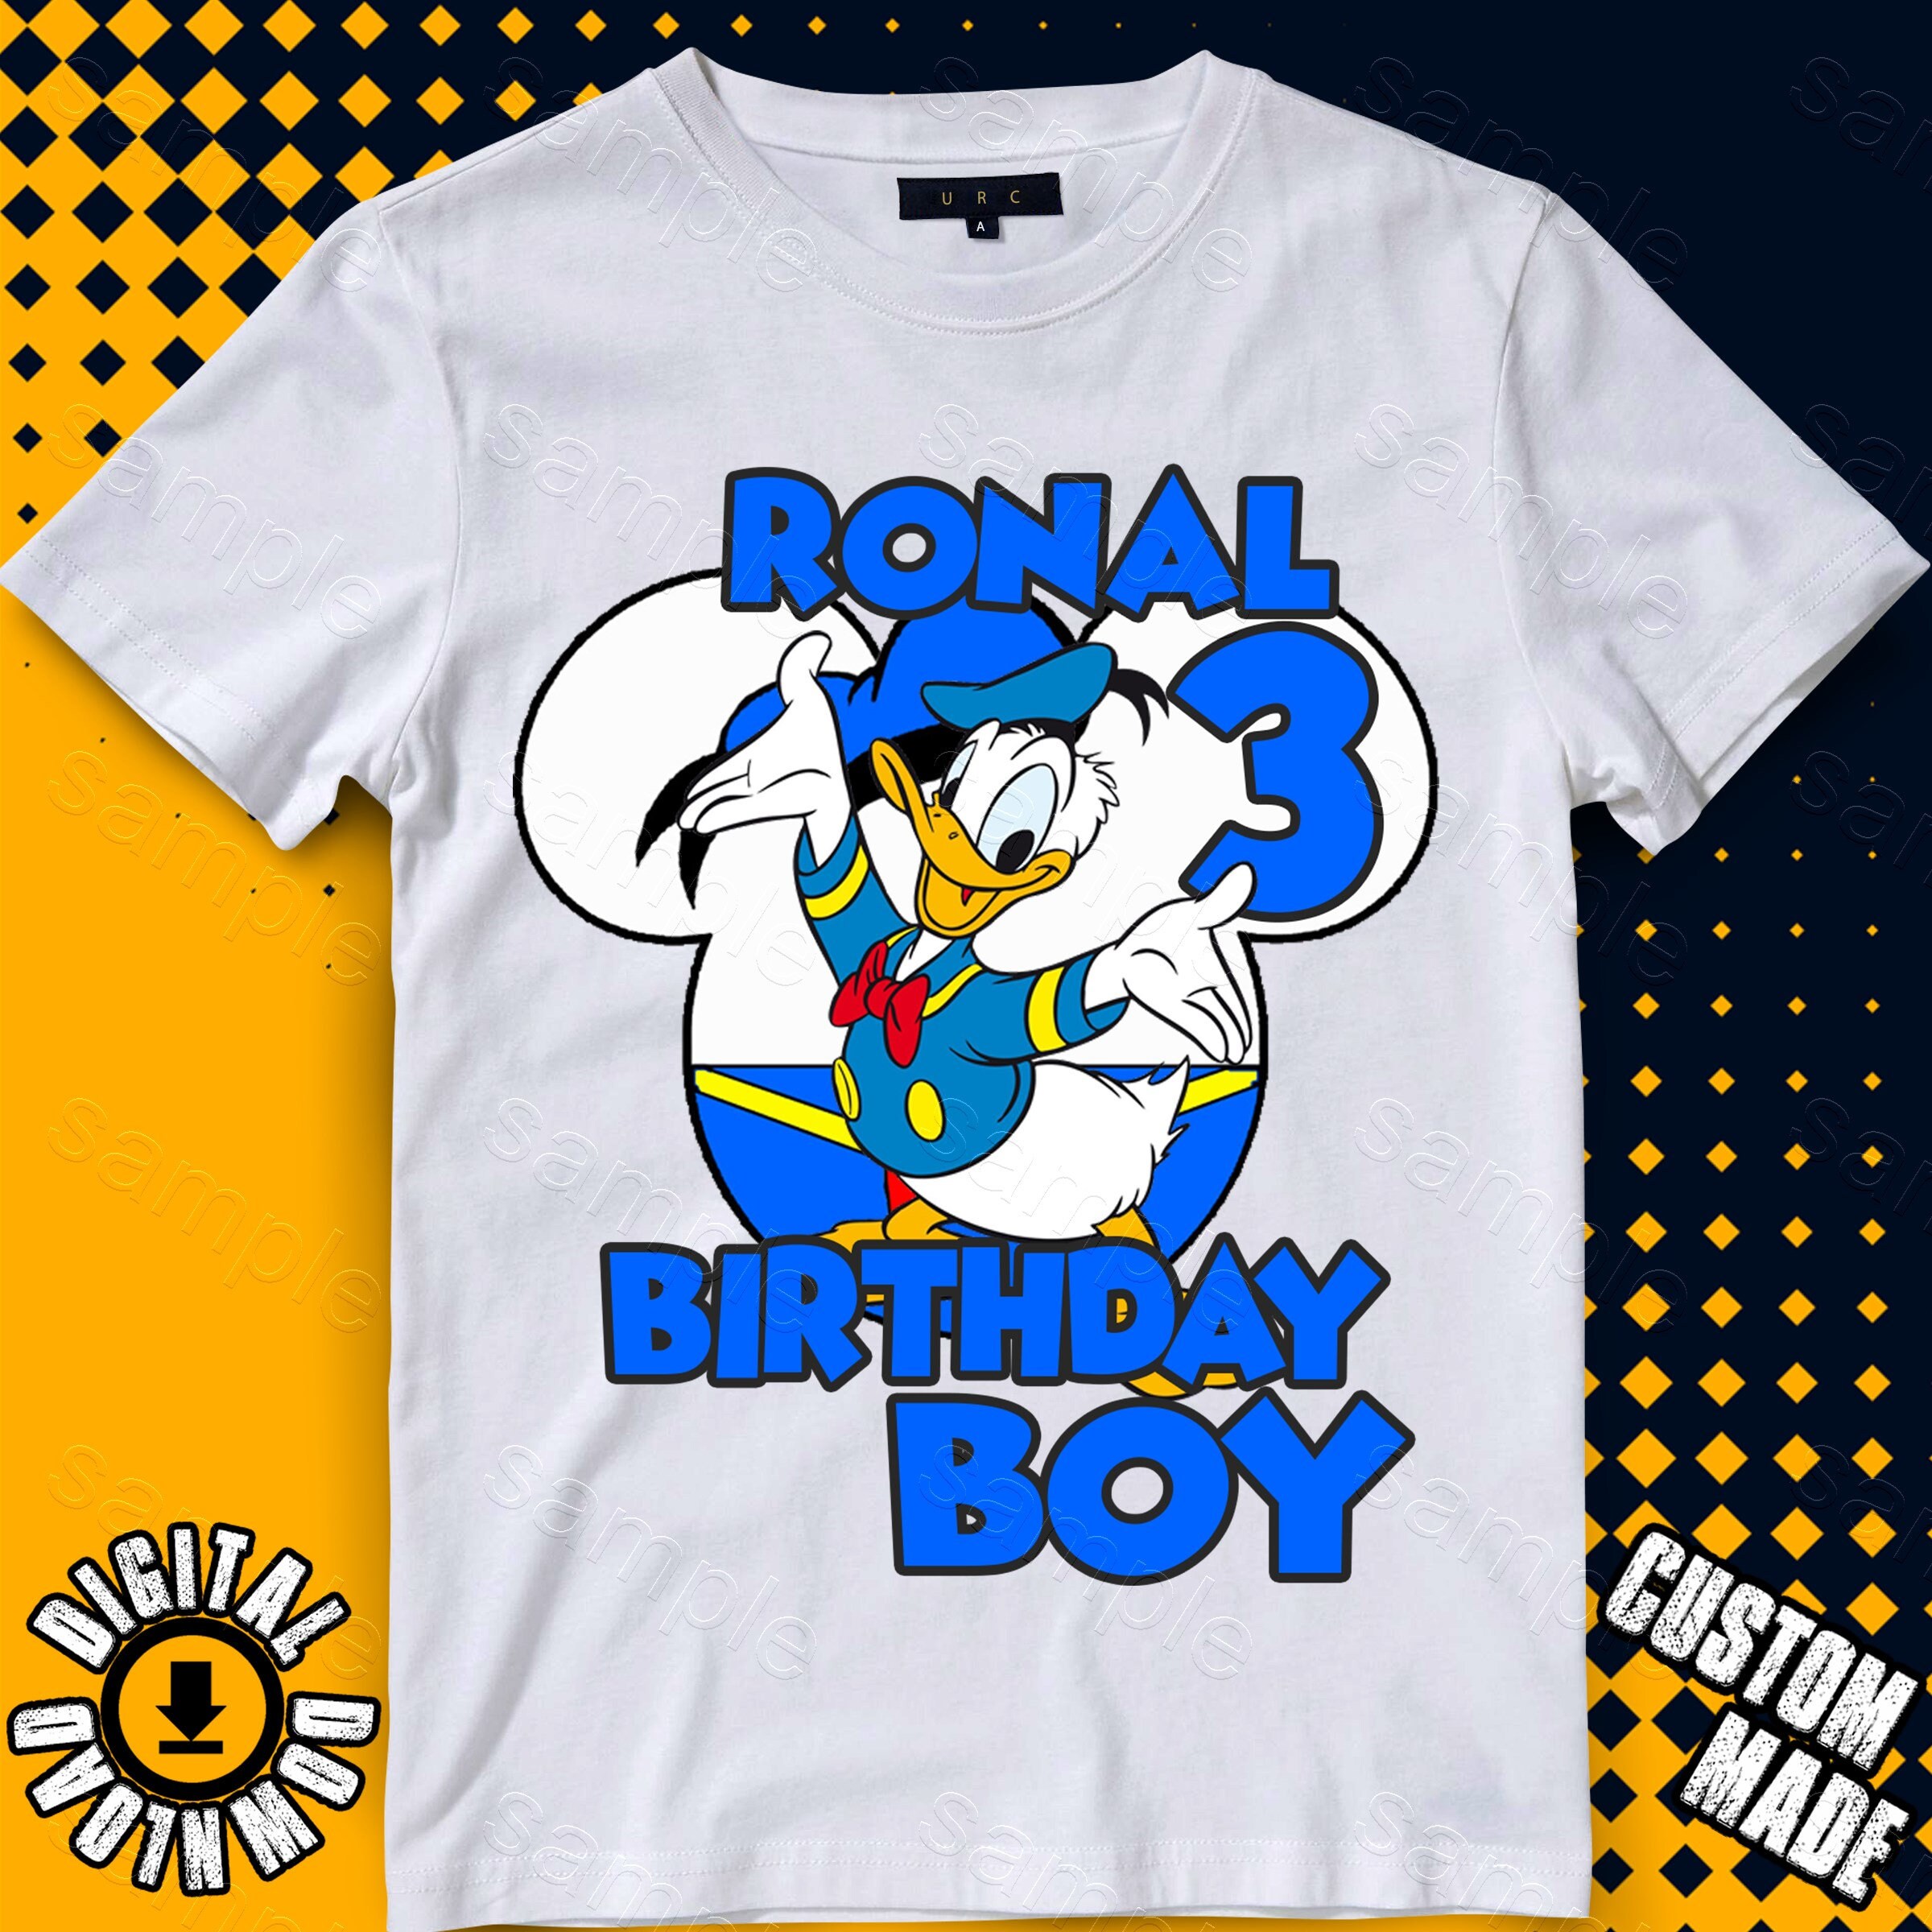 Boy Girl birthday bodysuit/onesie Donald Duck first birthday shirt Donald Duck 1st birthday shirt Boy Girl birthday shirt Personalized Customized Donald Duck birthday shirt 